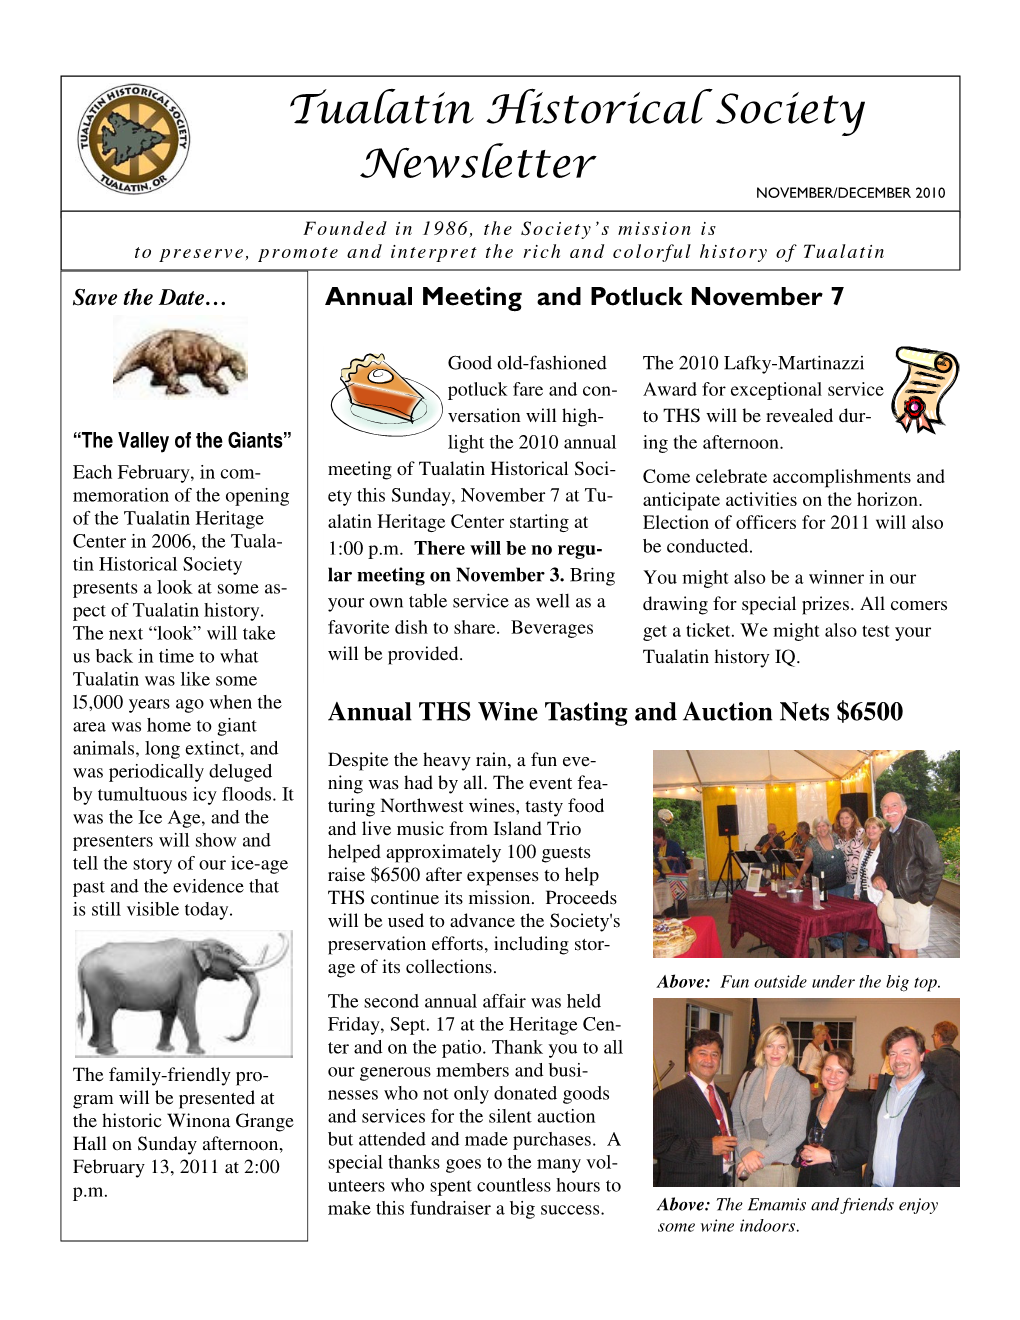 THS Newsletter Nov Dec 2010.Pub